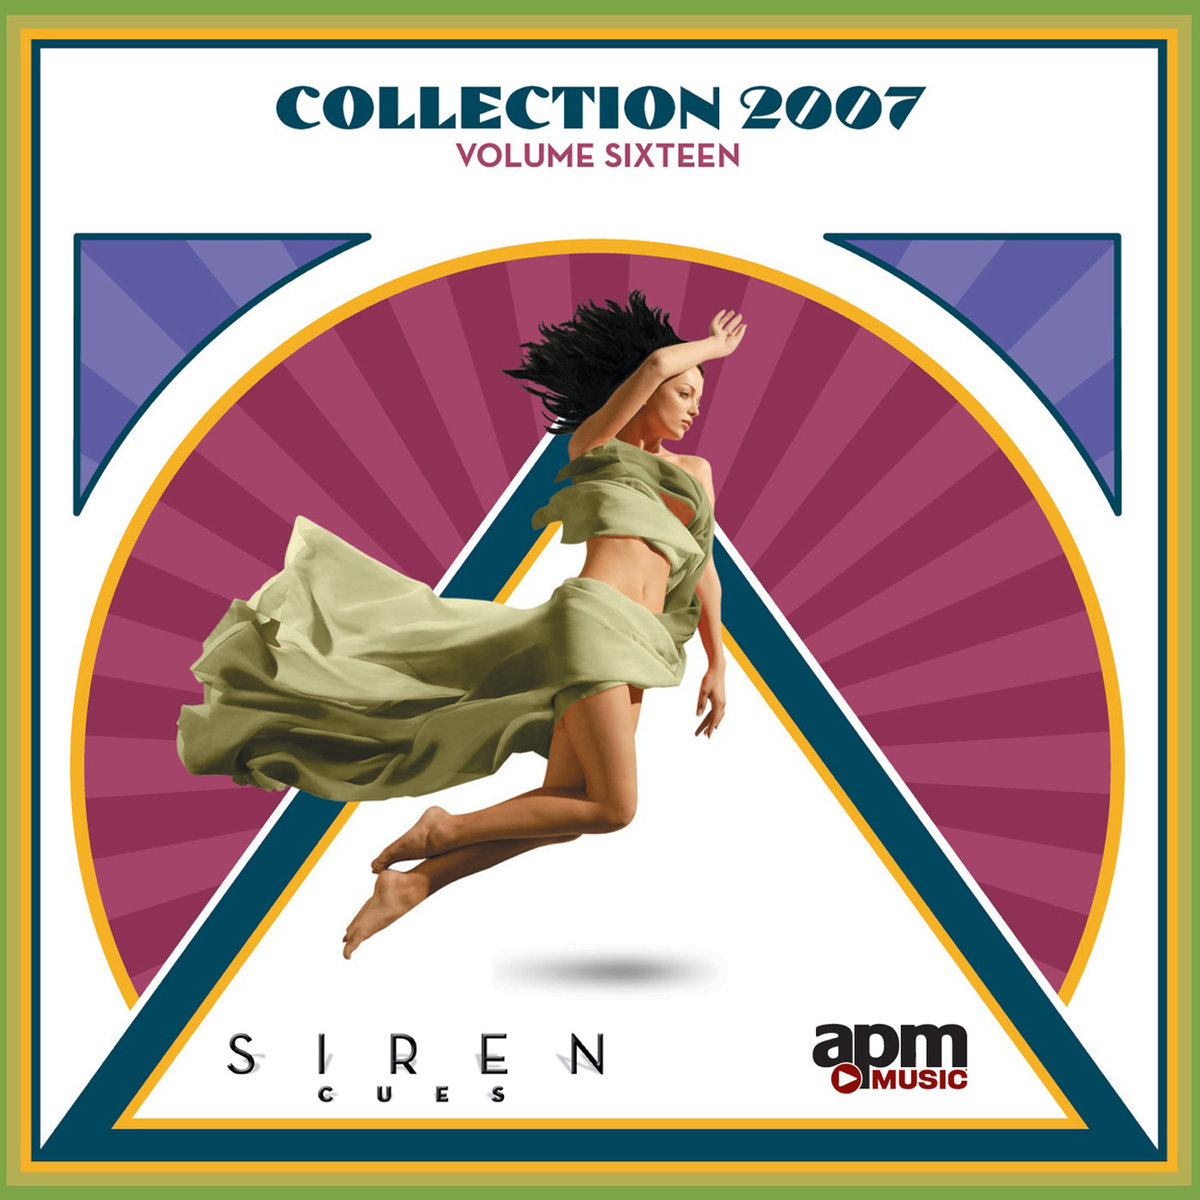 Collection 2007. Mp3 коллекция (2007). Ghetto fabulous обложка. Cover сборник. Gotta get back.